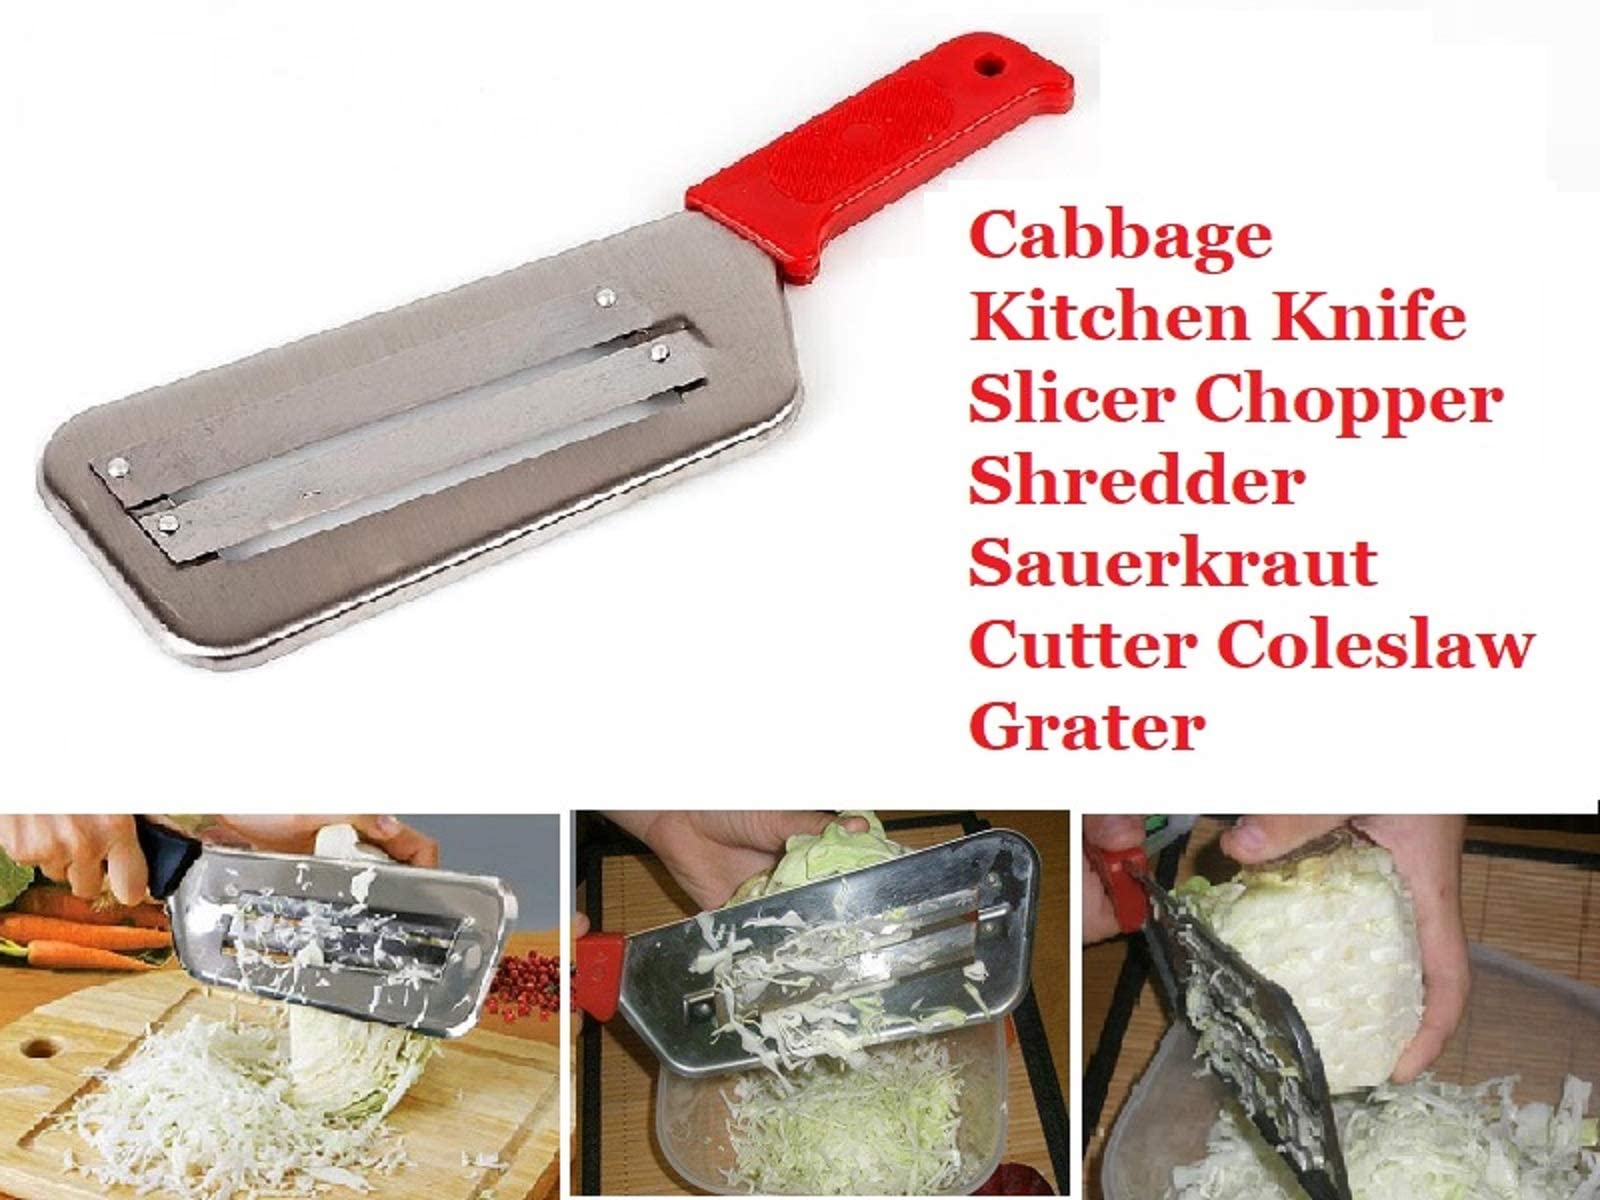 Cabbage Kitchen Knife Slicer Chopper Shredder Sauerkraut Cutter Coleslaw Grater Mandoline Slicer